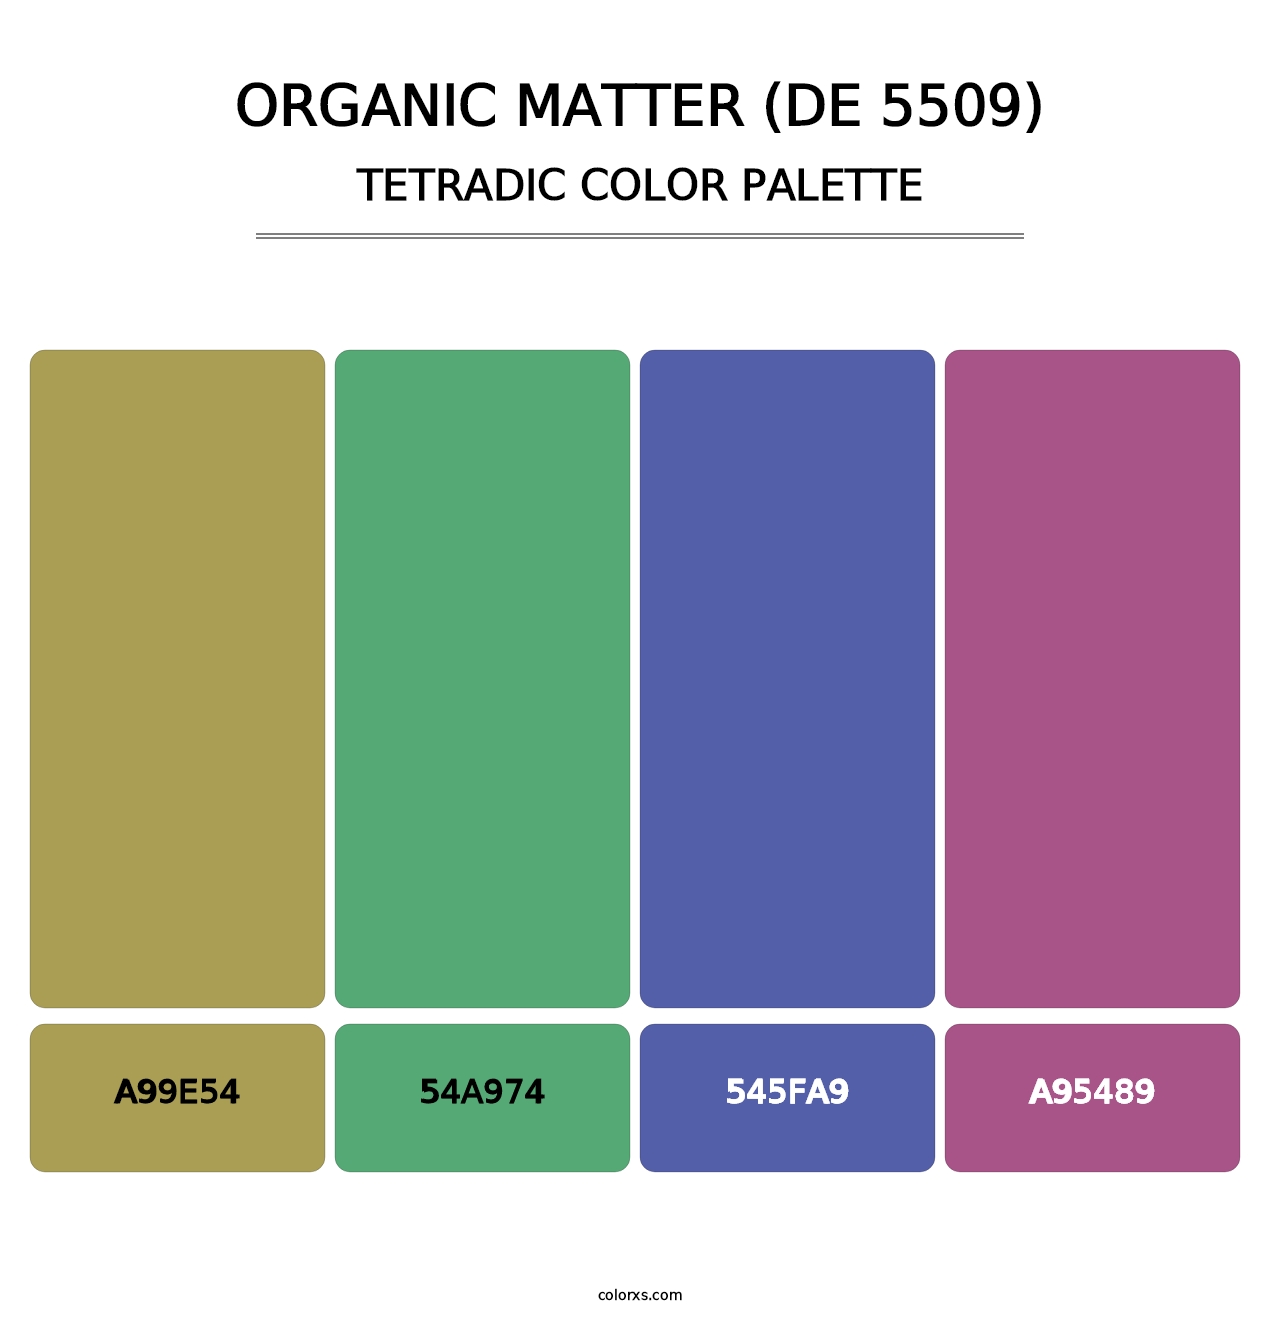 Organic Matter (DE 5509) - Tetradic Color Palette